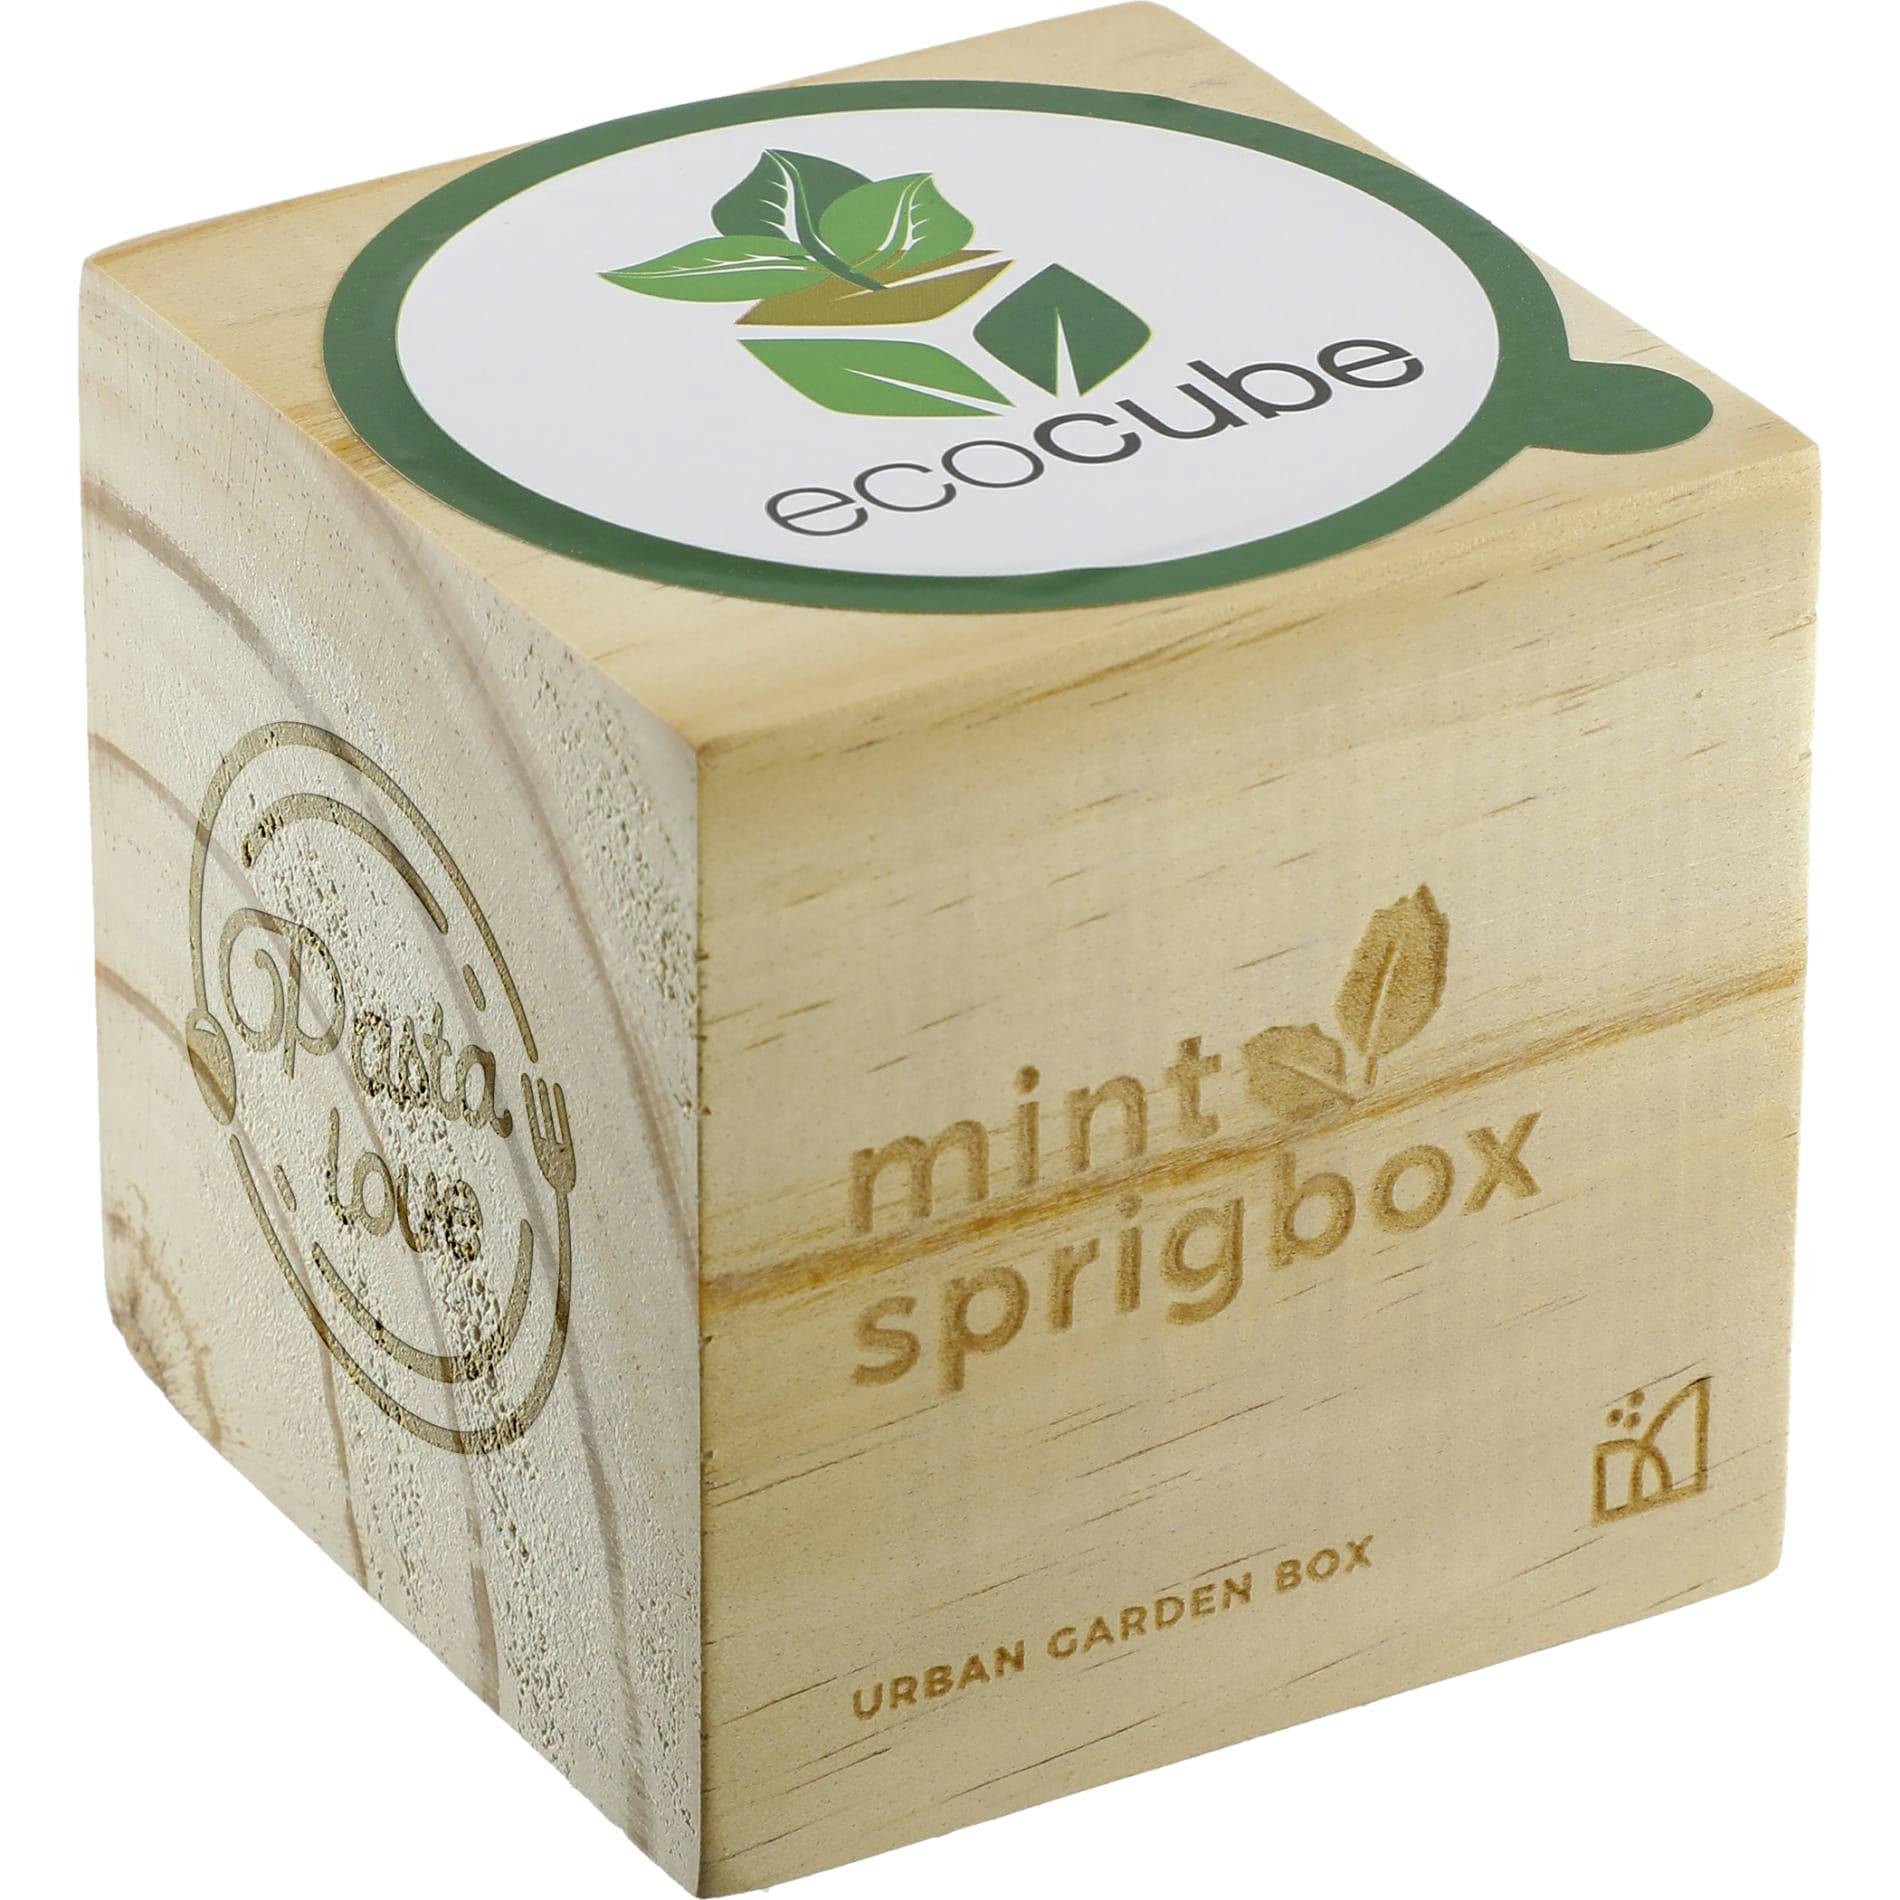 Sprigbox Mint Grow Kit - additional Image 1